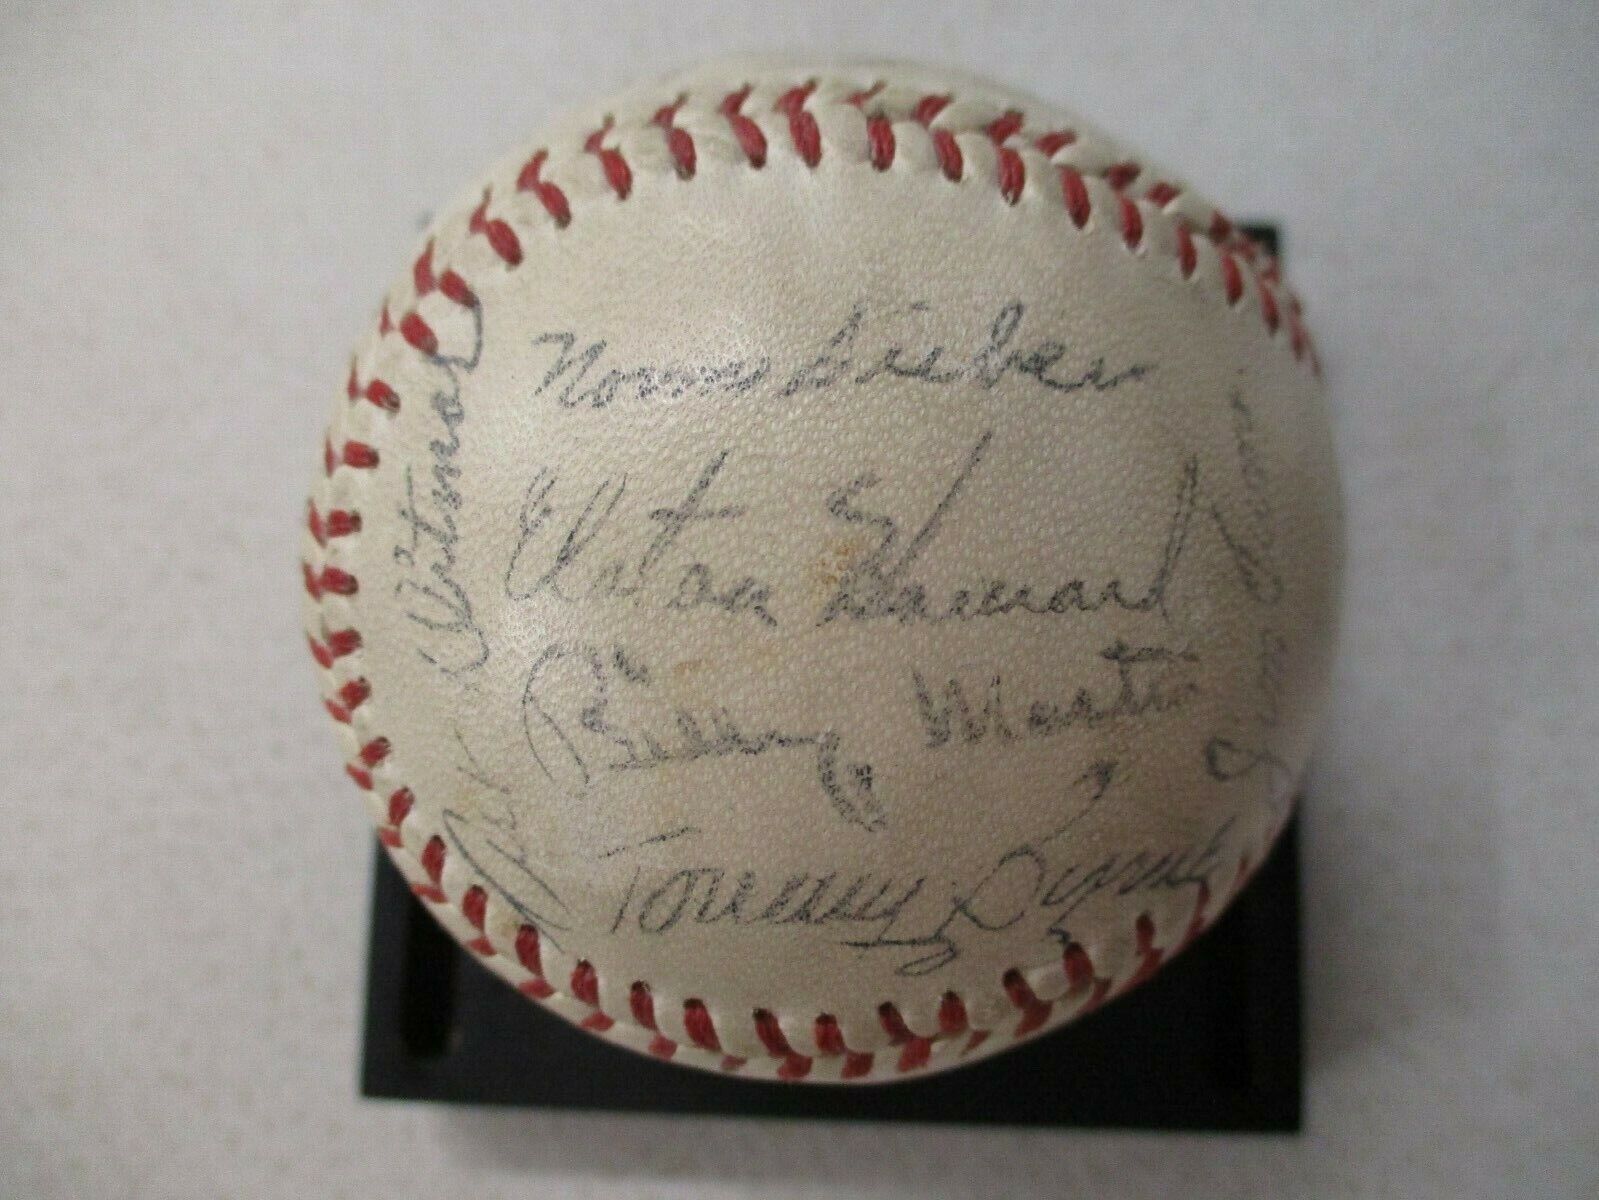 1950's New York Yankees Stadium Baseball Facsimile Stamped Stengel Mantle Dickey